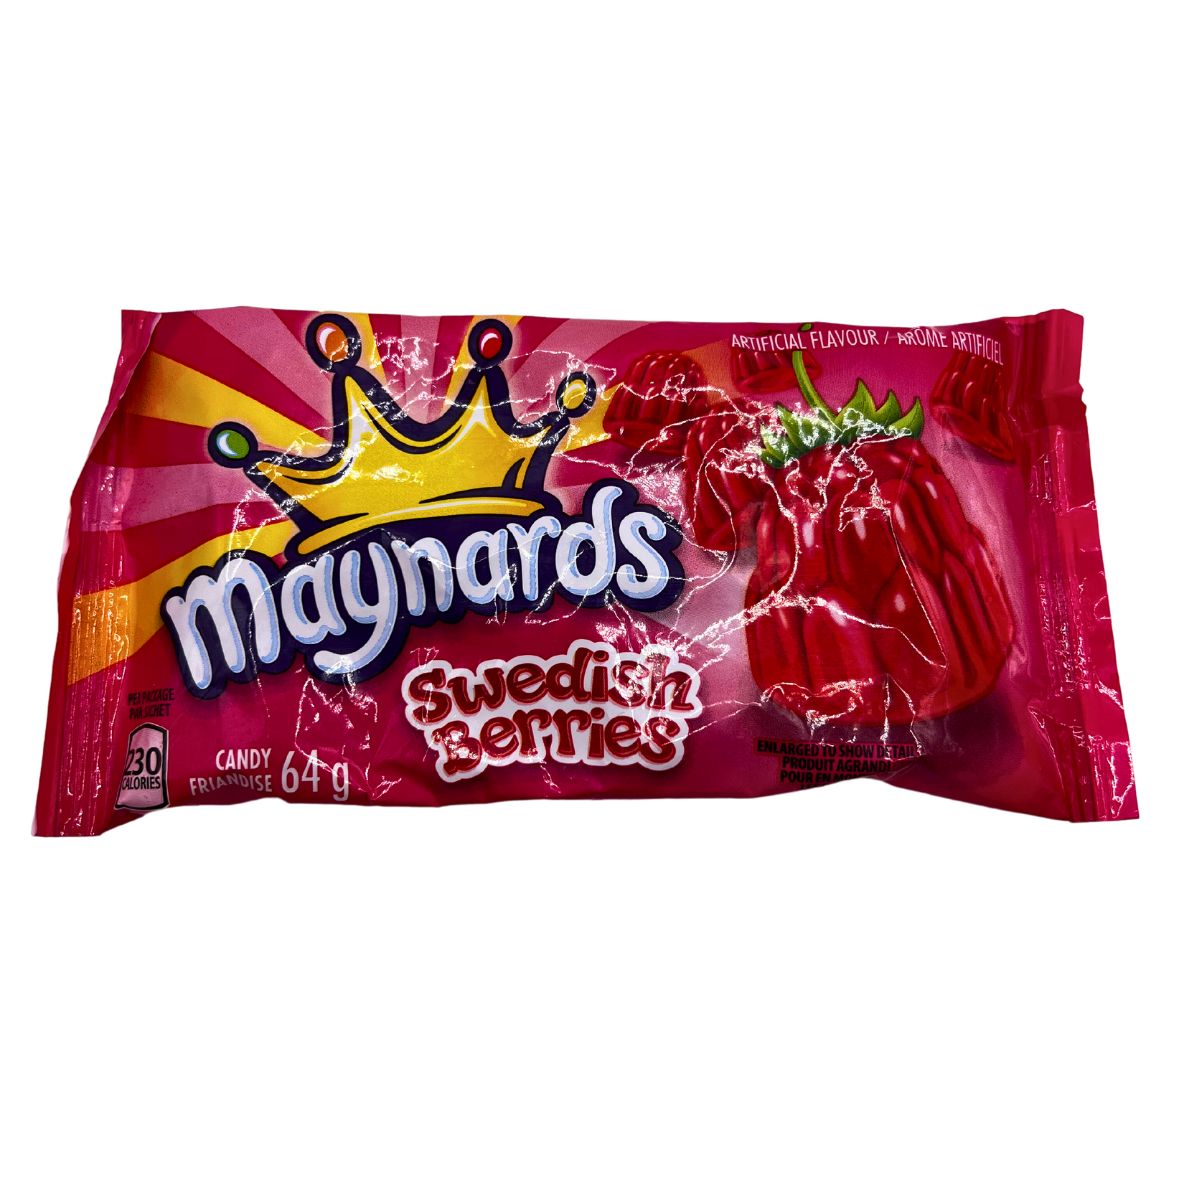 Maynard’s Swedish Berries